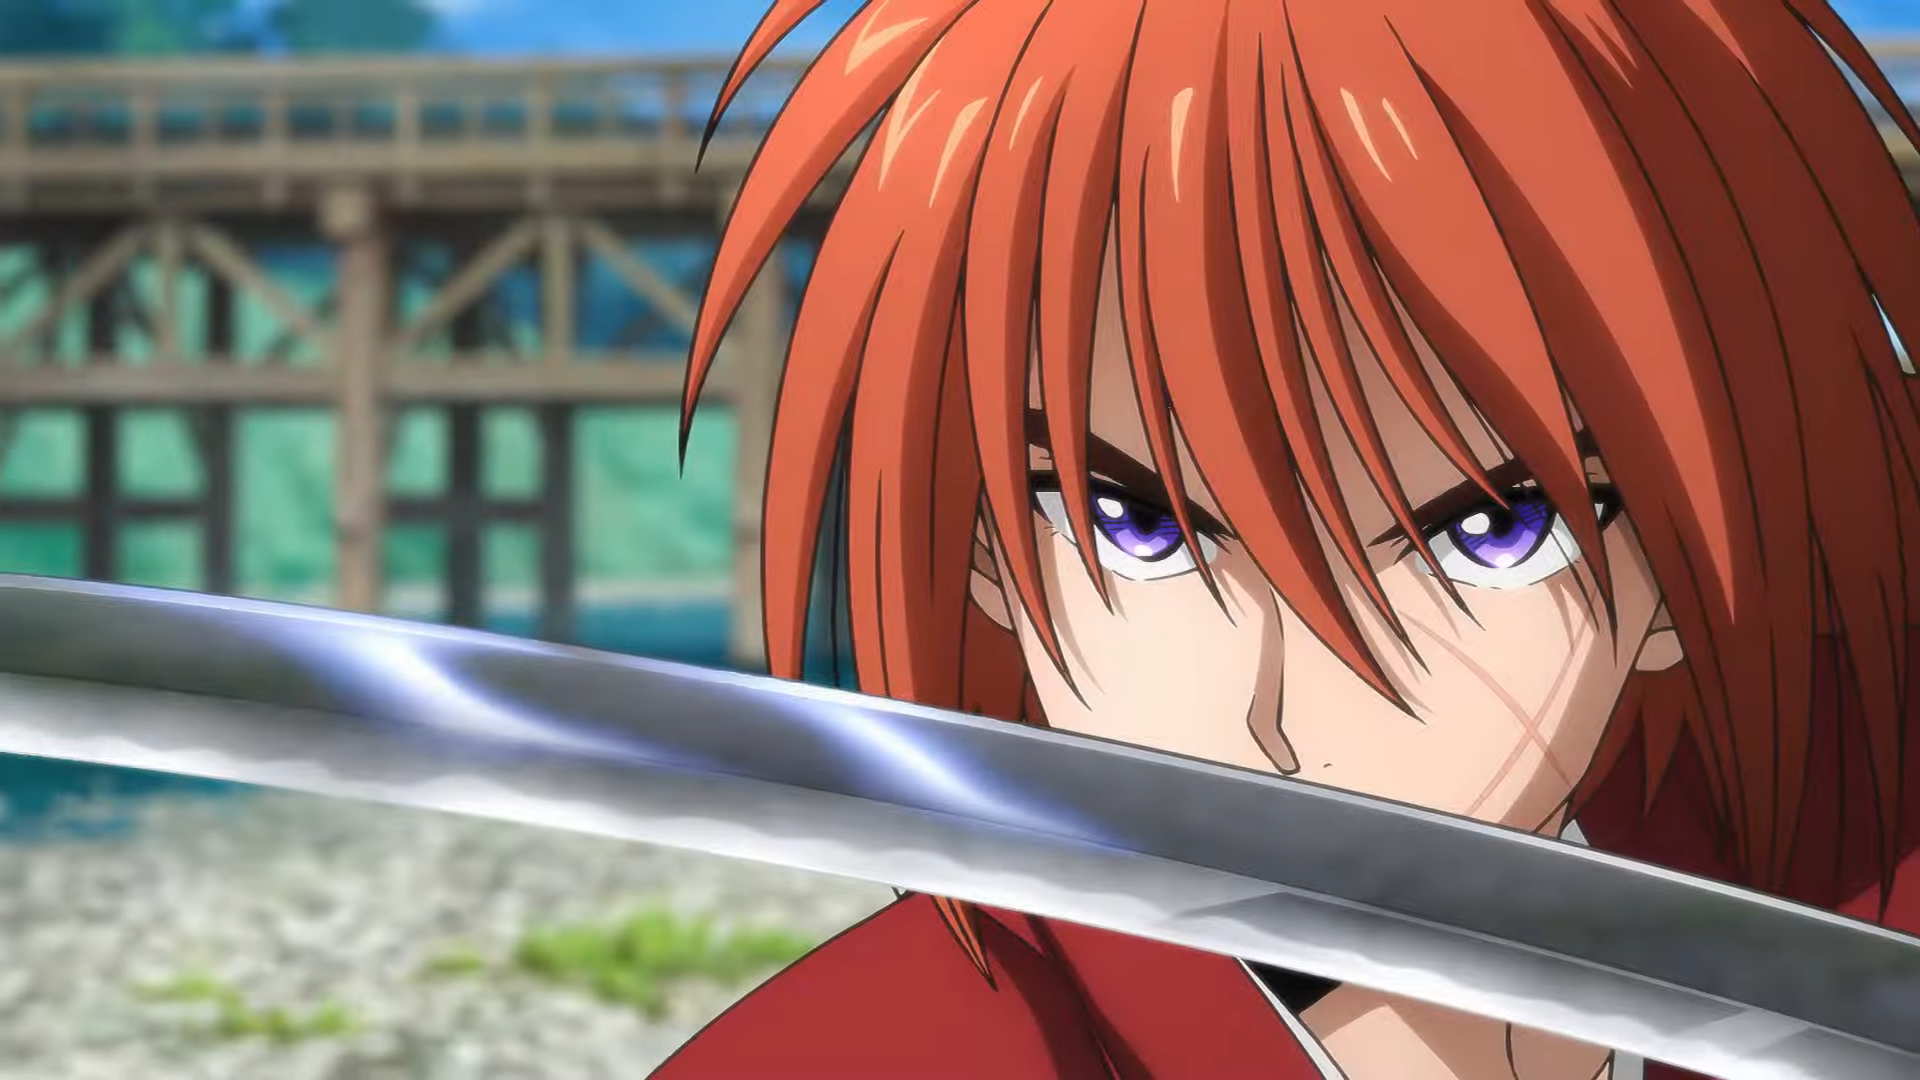 Rurouni Kenshin 2023 Reveals New Trailer Cast Additions Anime Corner 